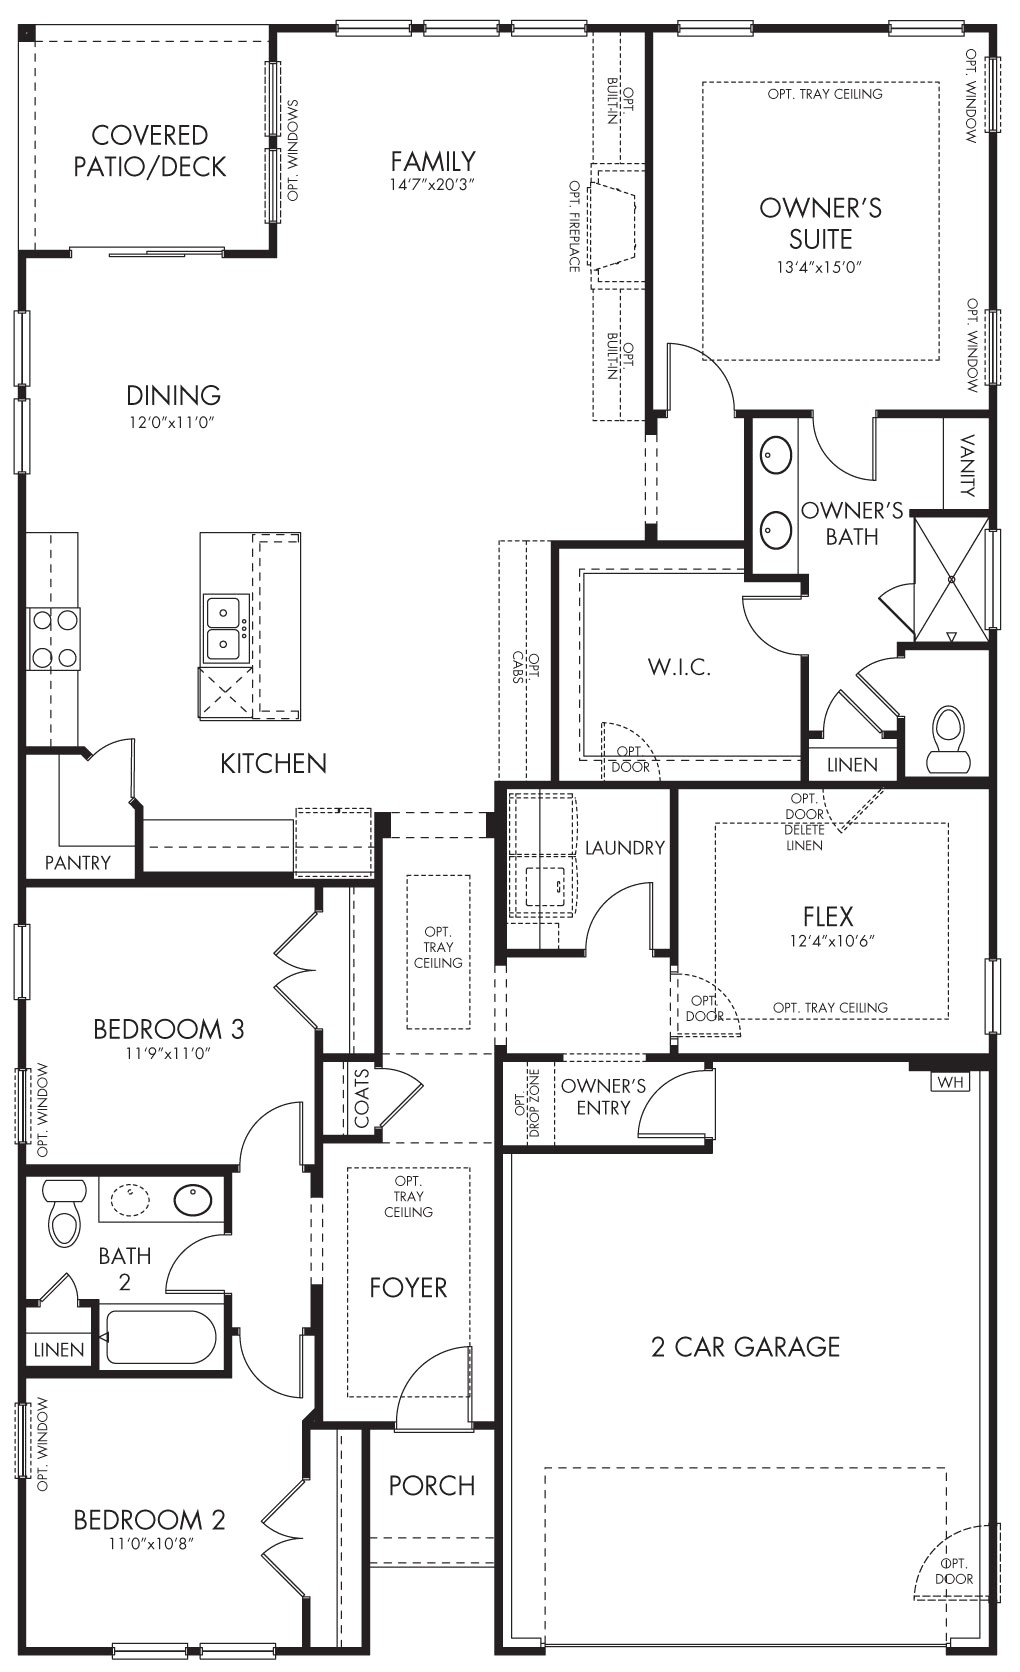 meritage homes plans awesome meritage homes floor plans best newberry model 3br 2ba homes